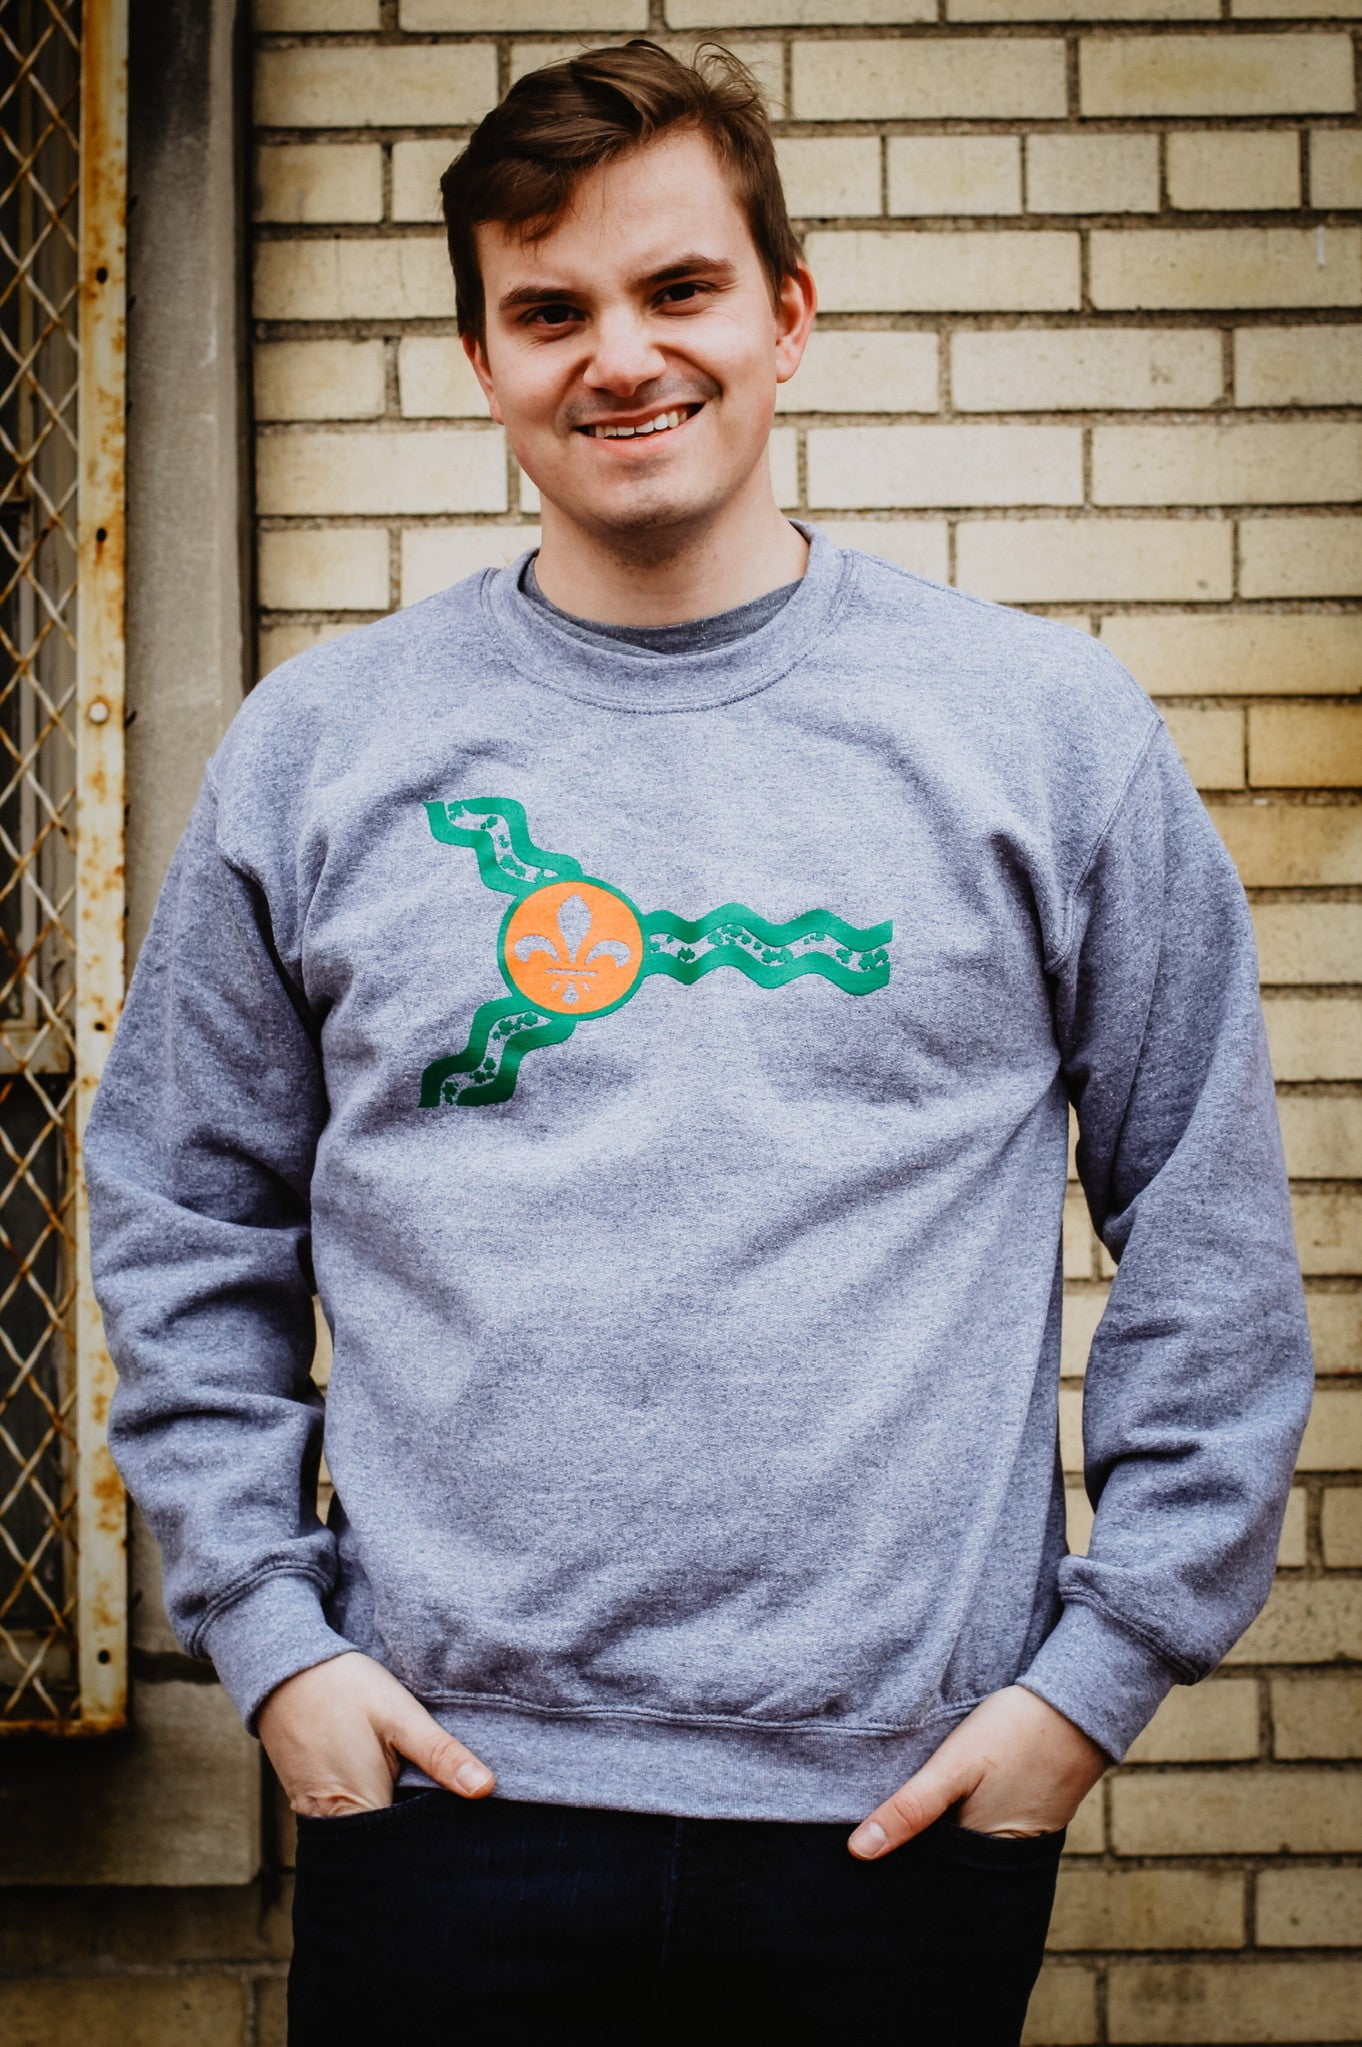 A man wearing a grey St. Louis flag St. Patrick's Day crewneck sweatshirt.